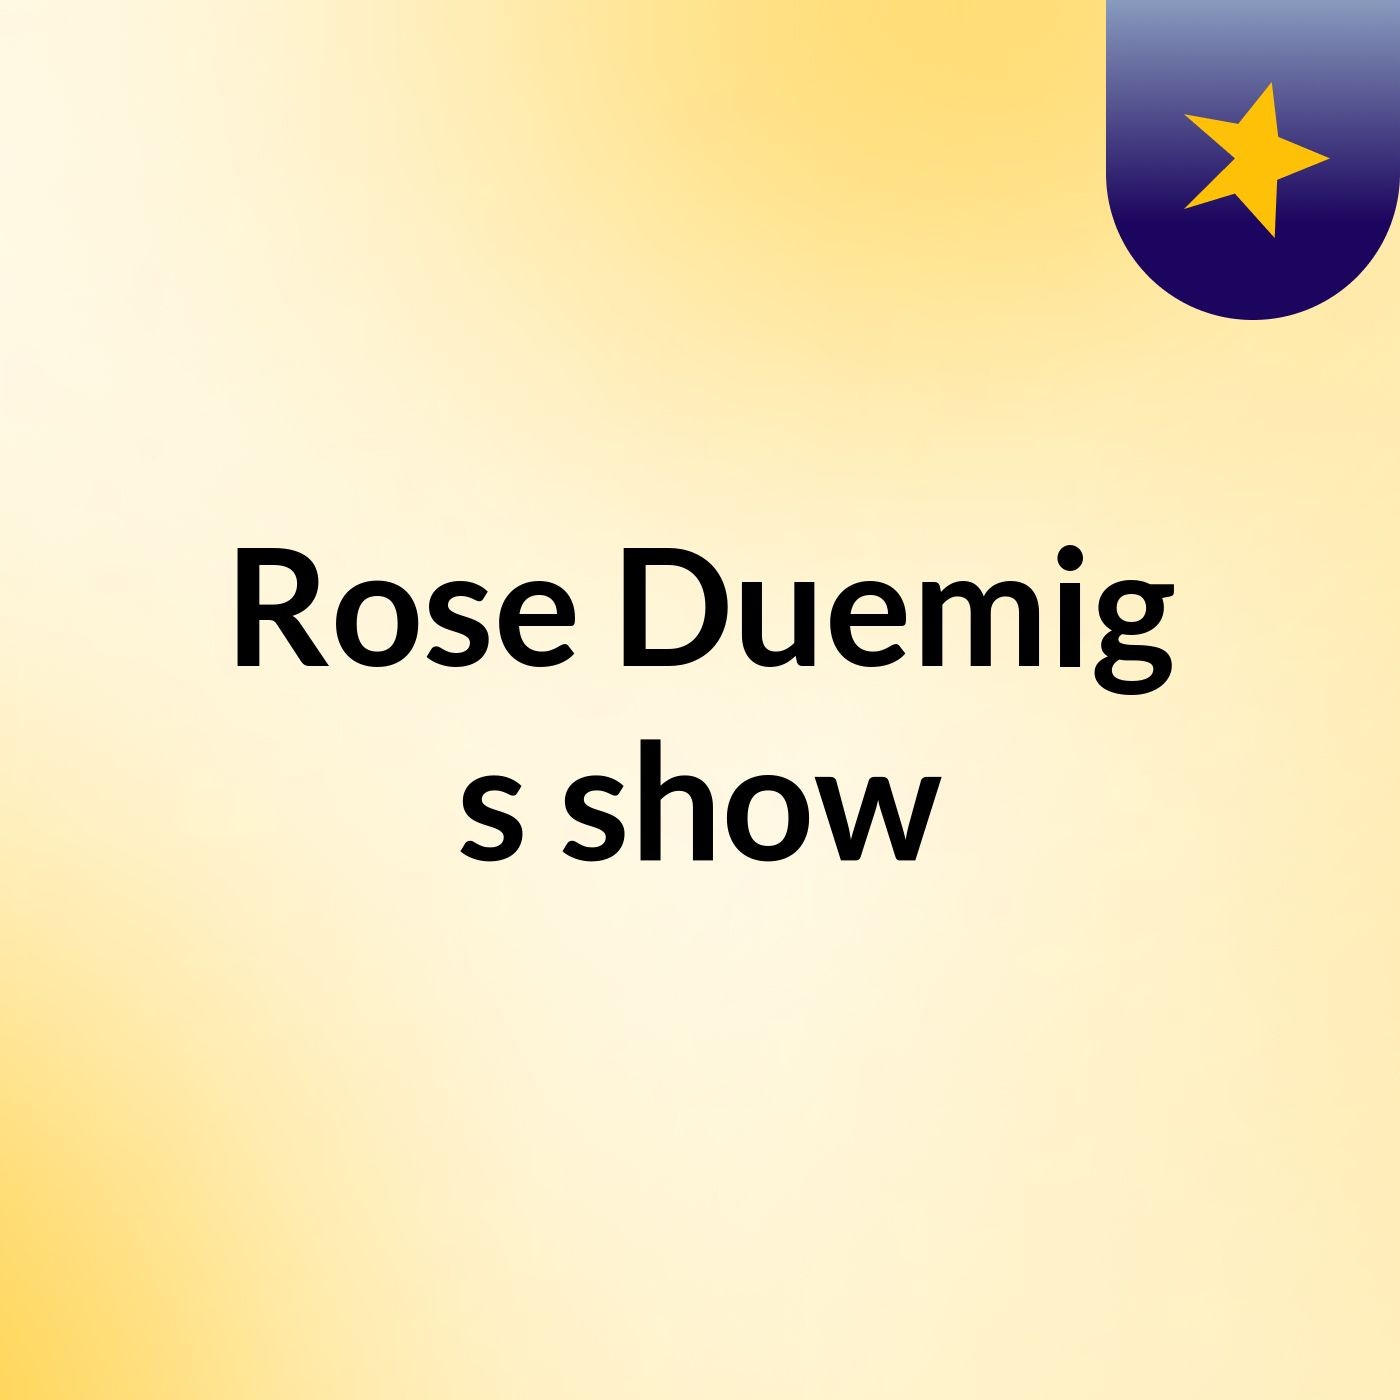 Rose Duemig's show